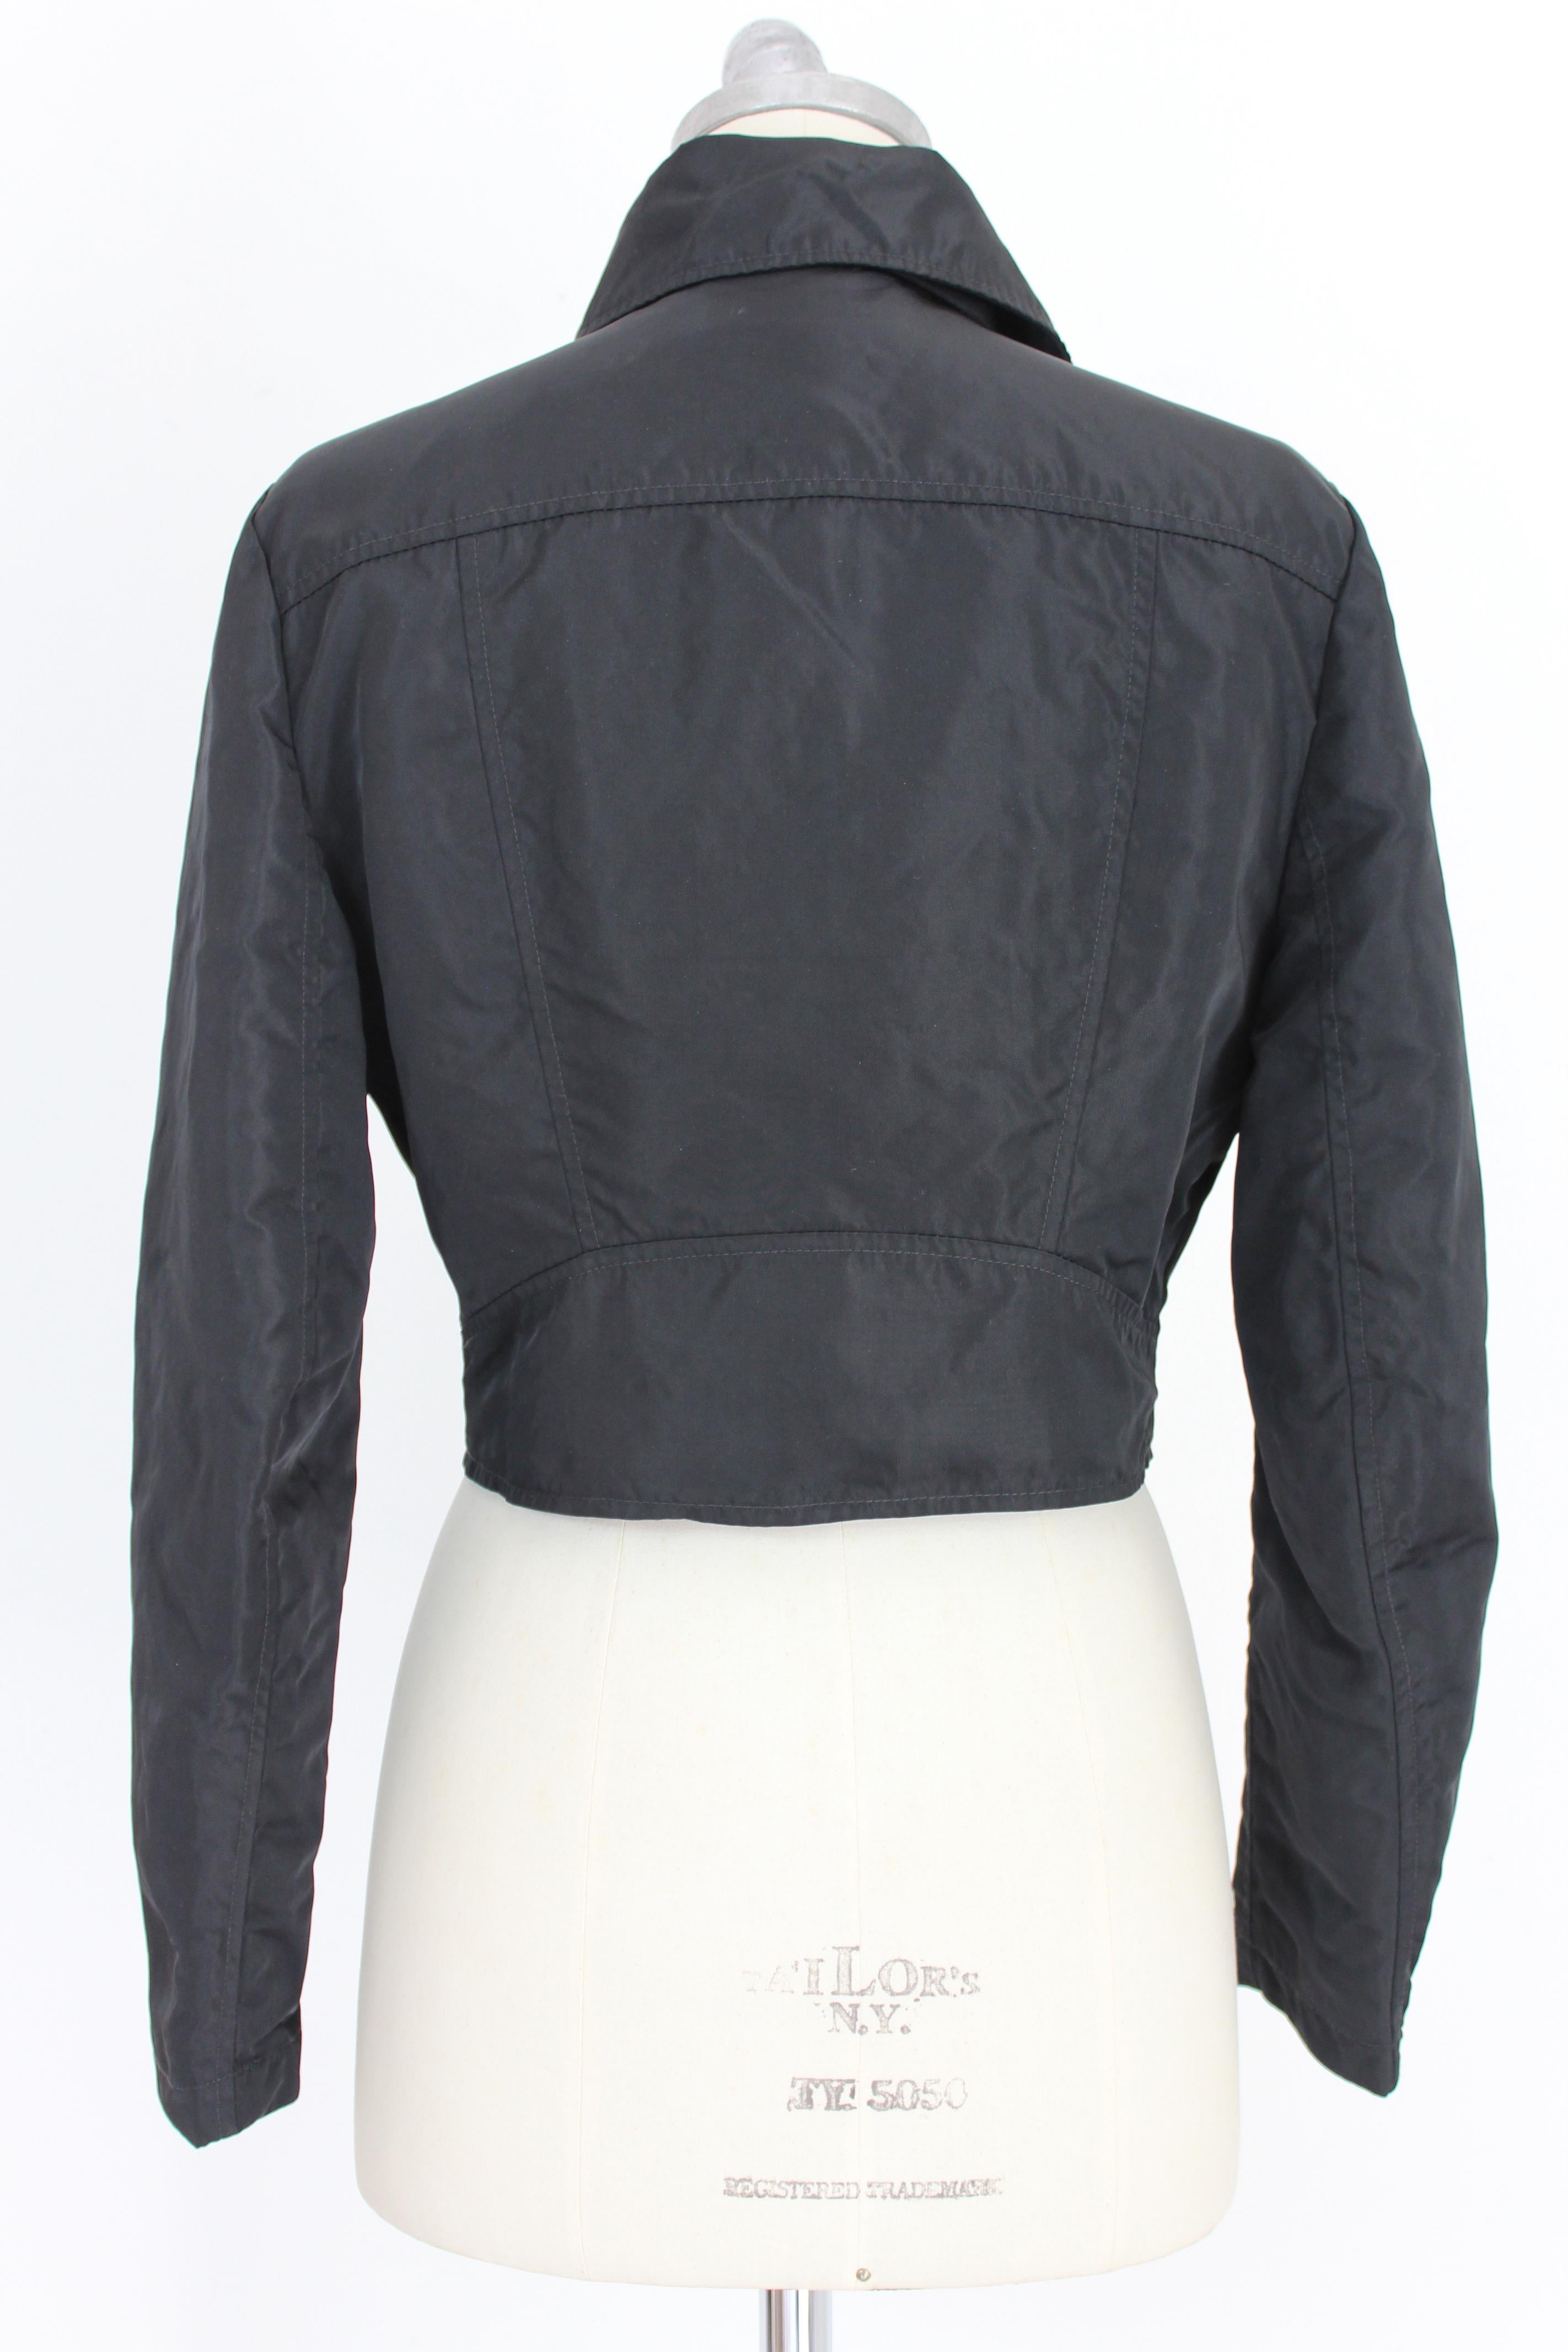 Dries Van Noten Shiny Black Short Chiodo Jacket In Excellent Condition In Brindisi, Bt